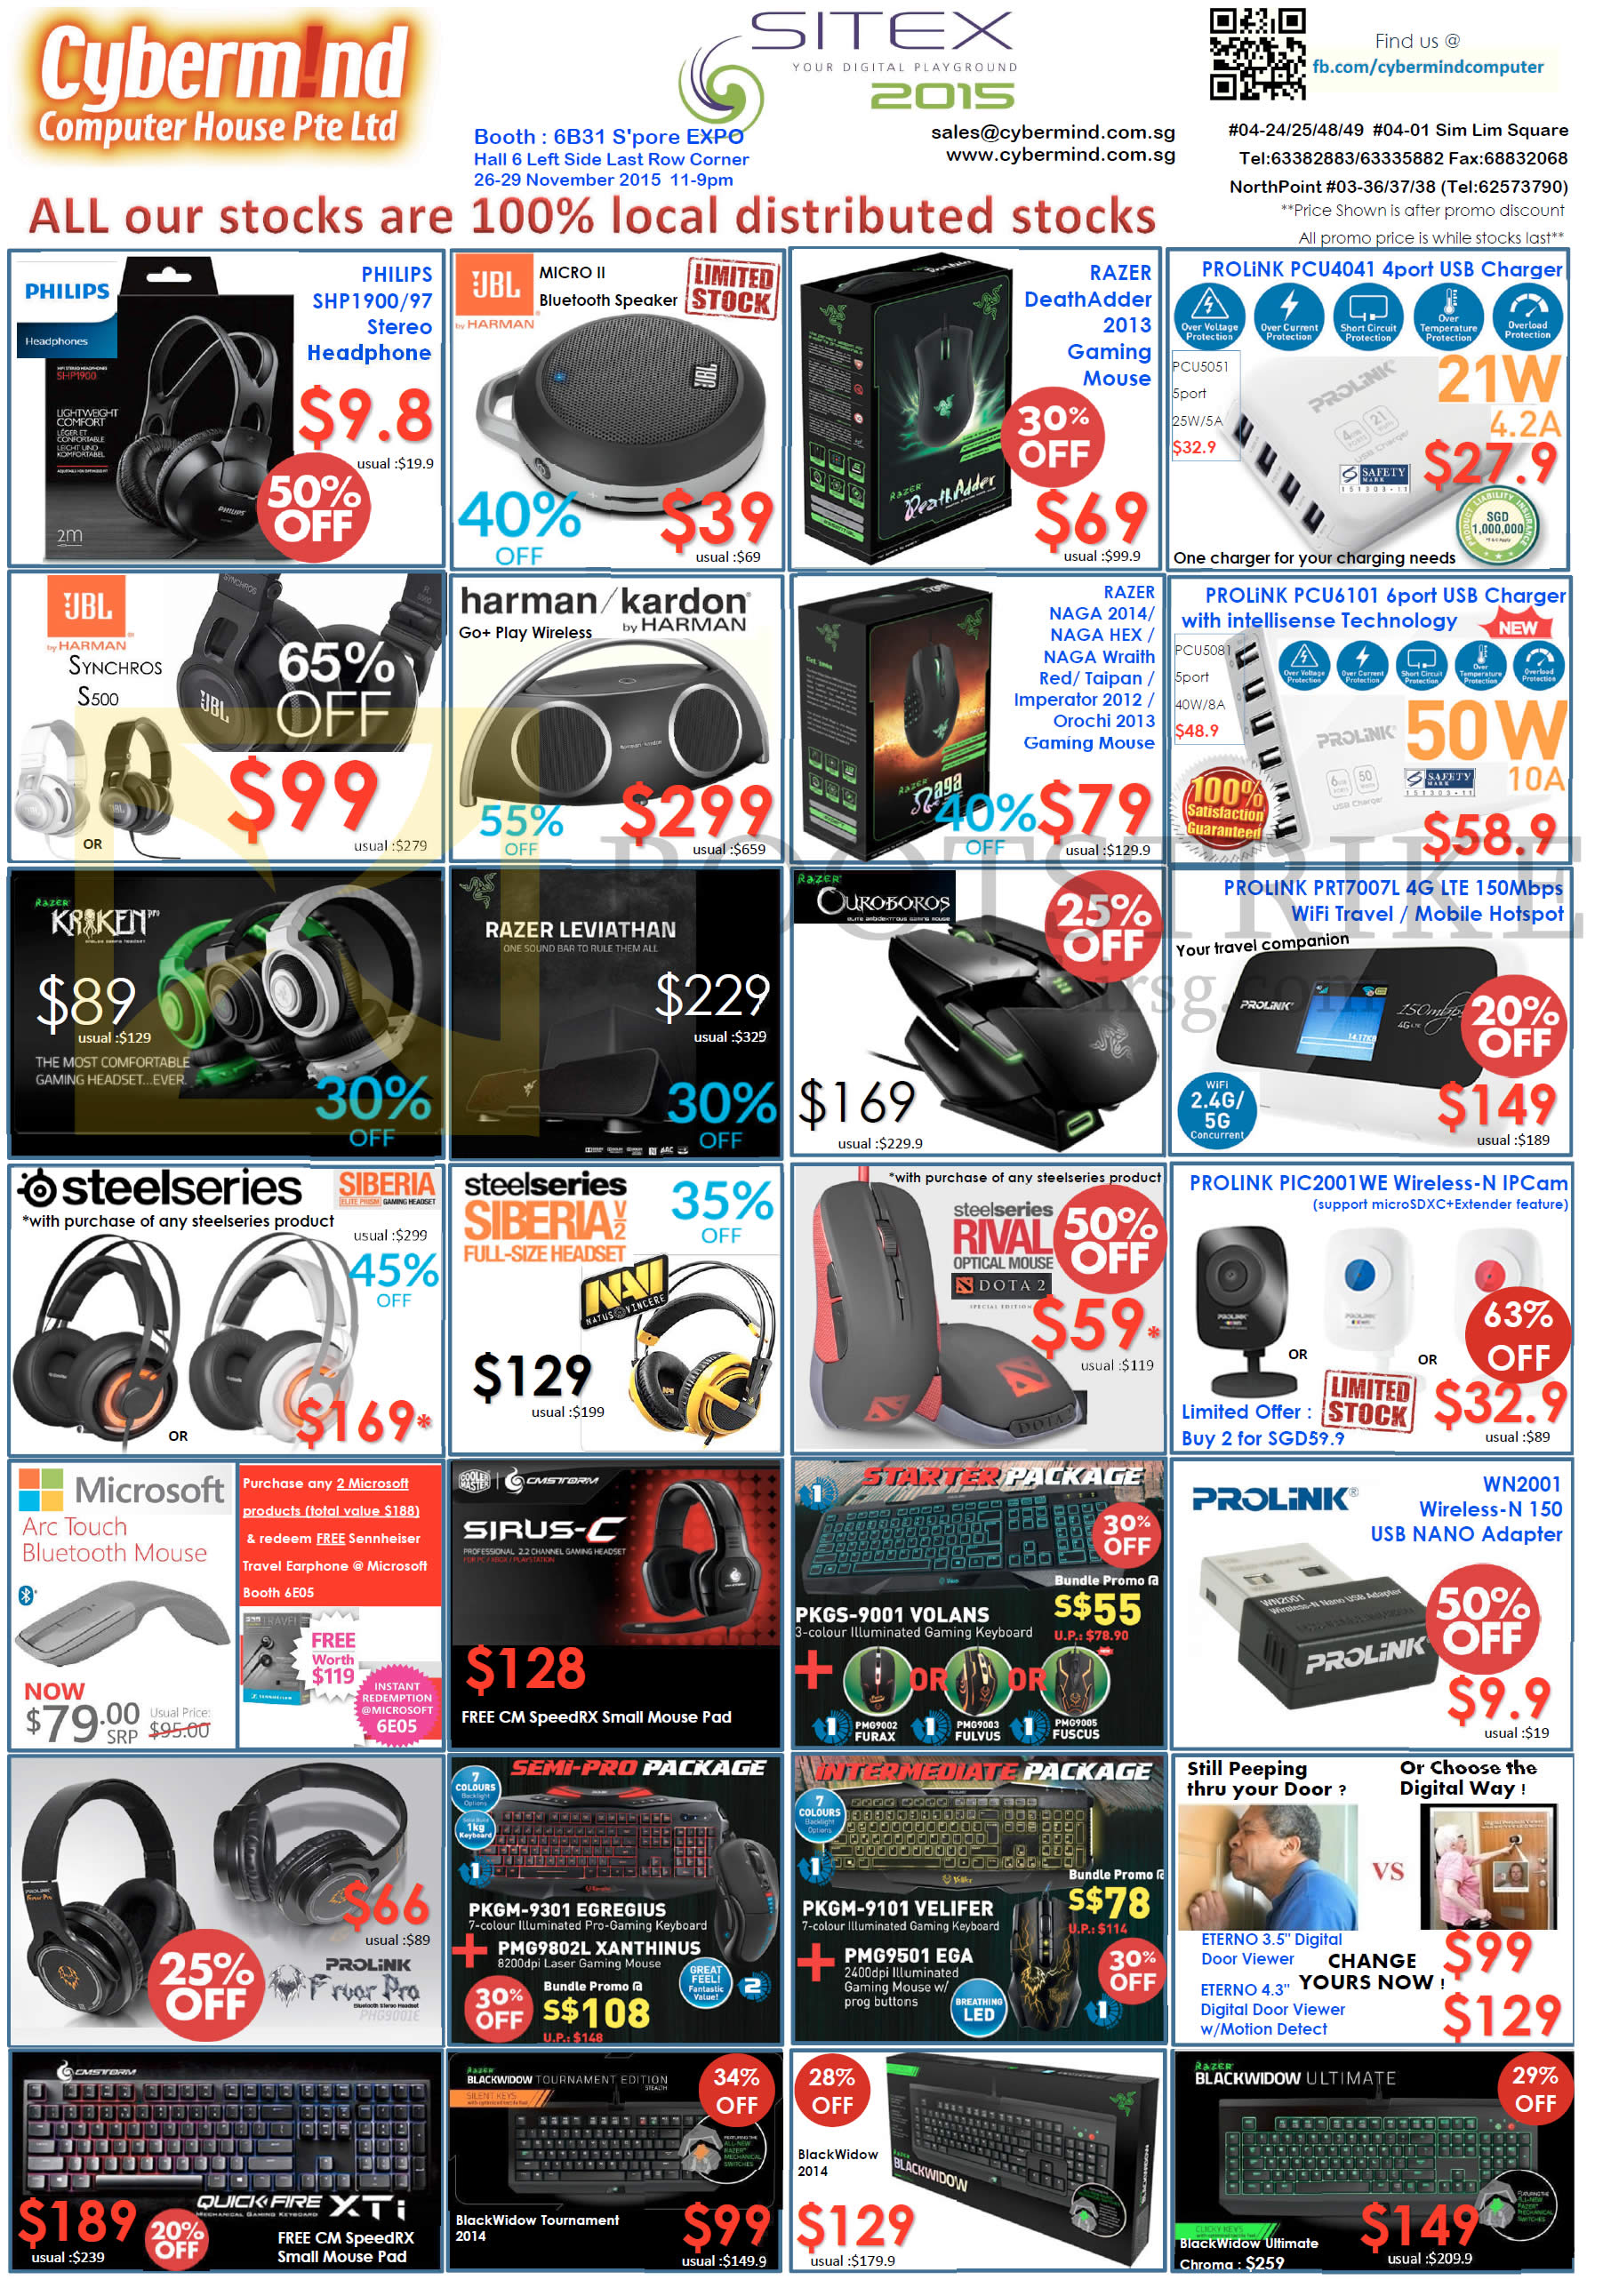 SITEX 2015 price list image brochure of Cybermind Headphones, Bluetooth Speaker, USB Charger, Mobile Hotsopt, Mouse, Keyboards, Philips, JBL, Steelseries, Prolink, Microsoft, Sirus-C